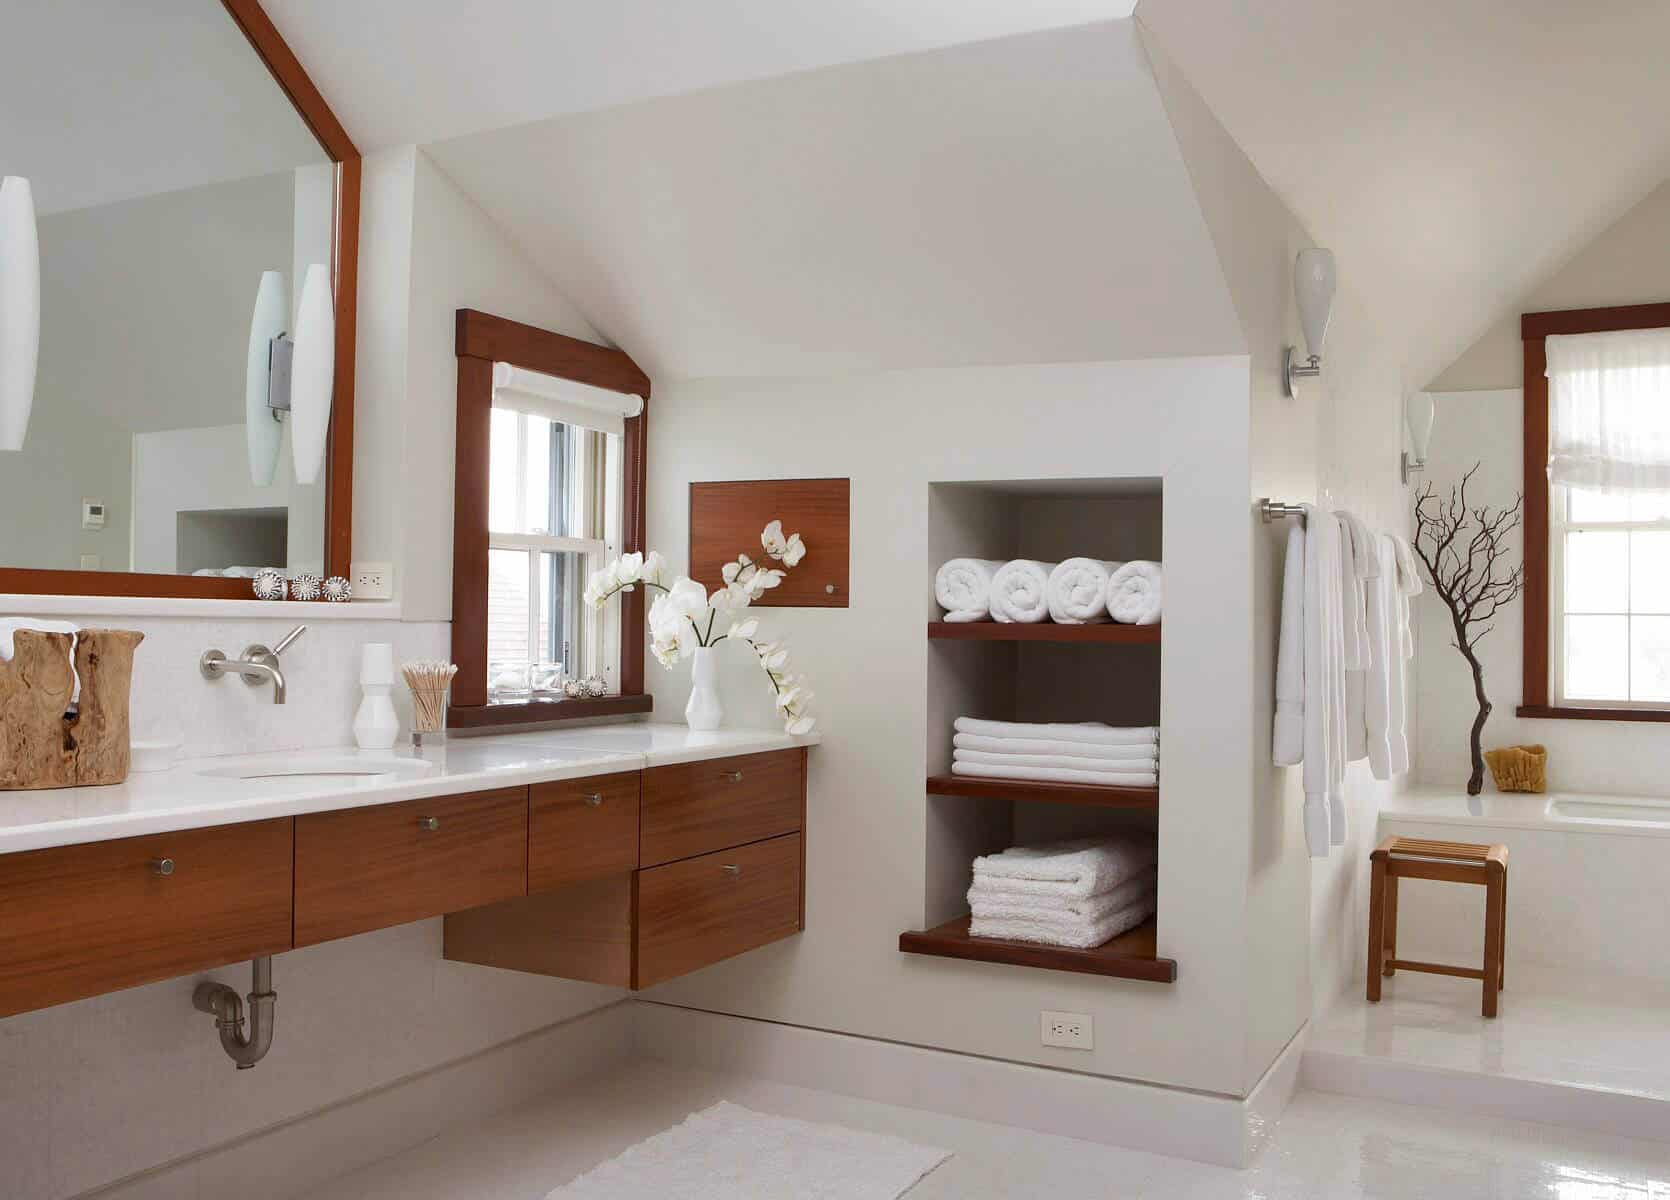 Towel Storage Ideas For Your Bathroom, Bathroom Towel Storage Shelves